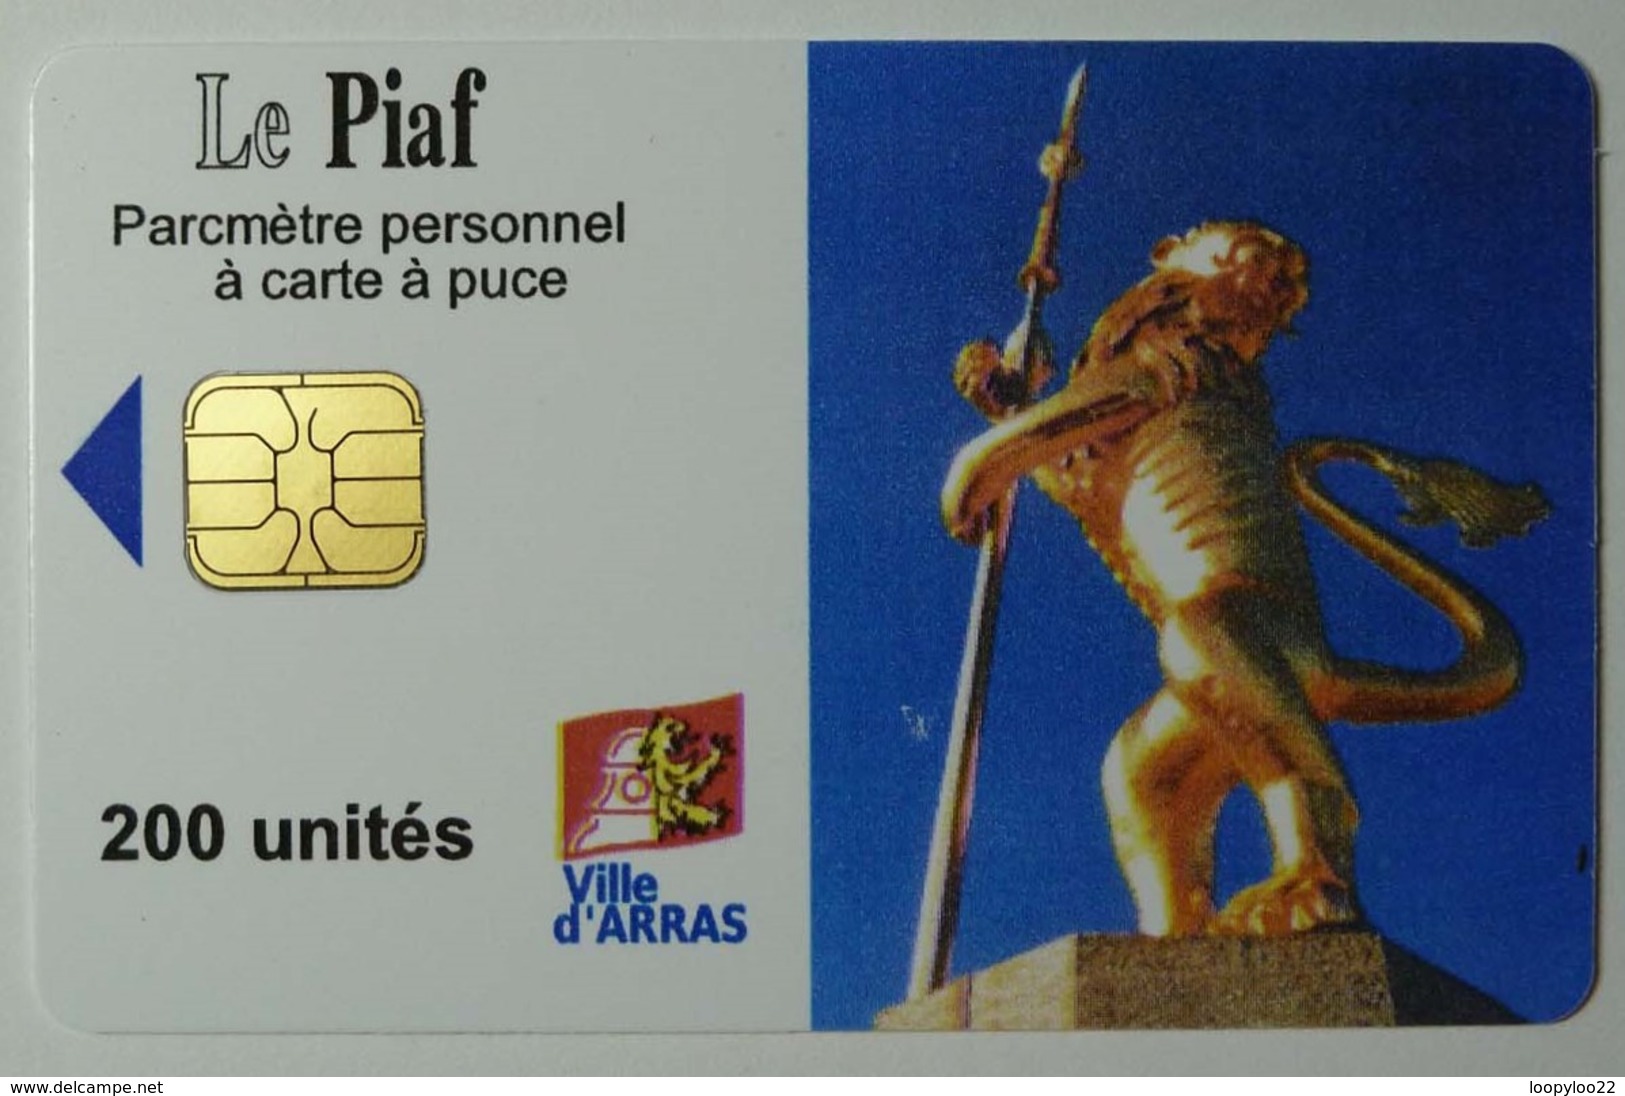 FRANCE - Le Piaf - Arras - 200 Units - 09/00 - 1000ex - 62000-2 - Mint - Scontrini Di Parcheggio